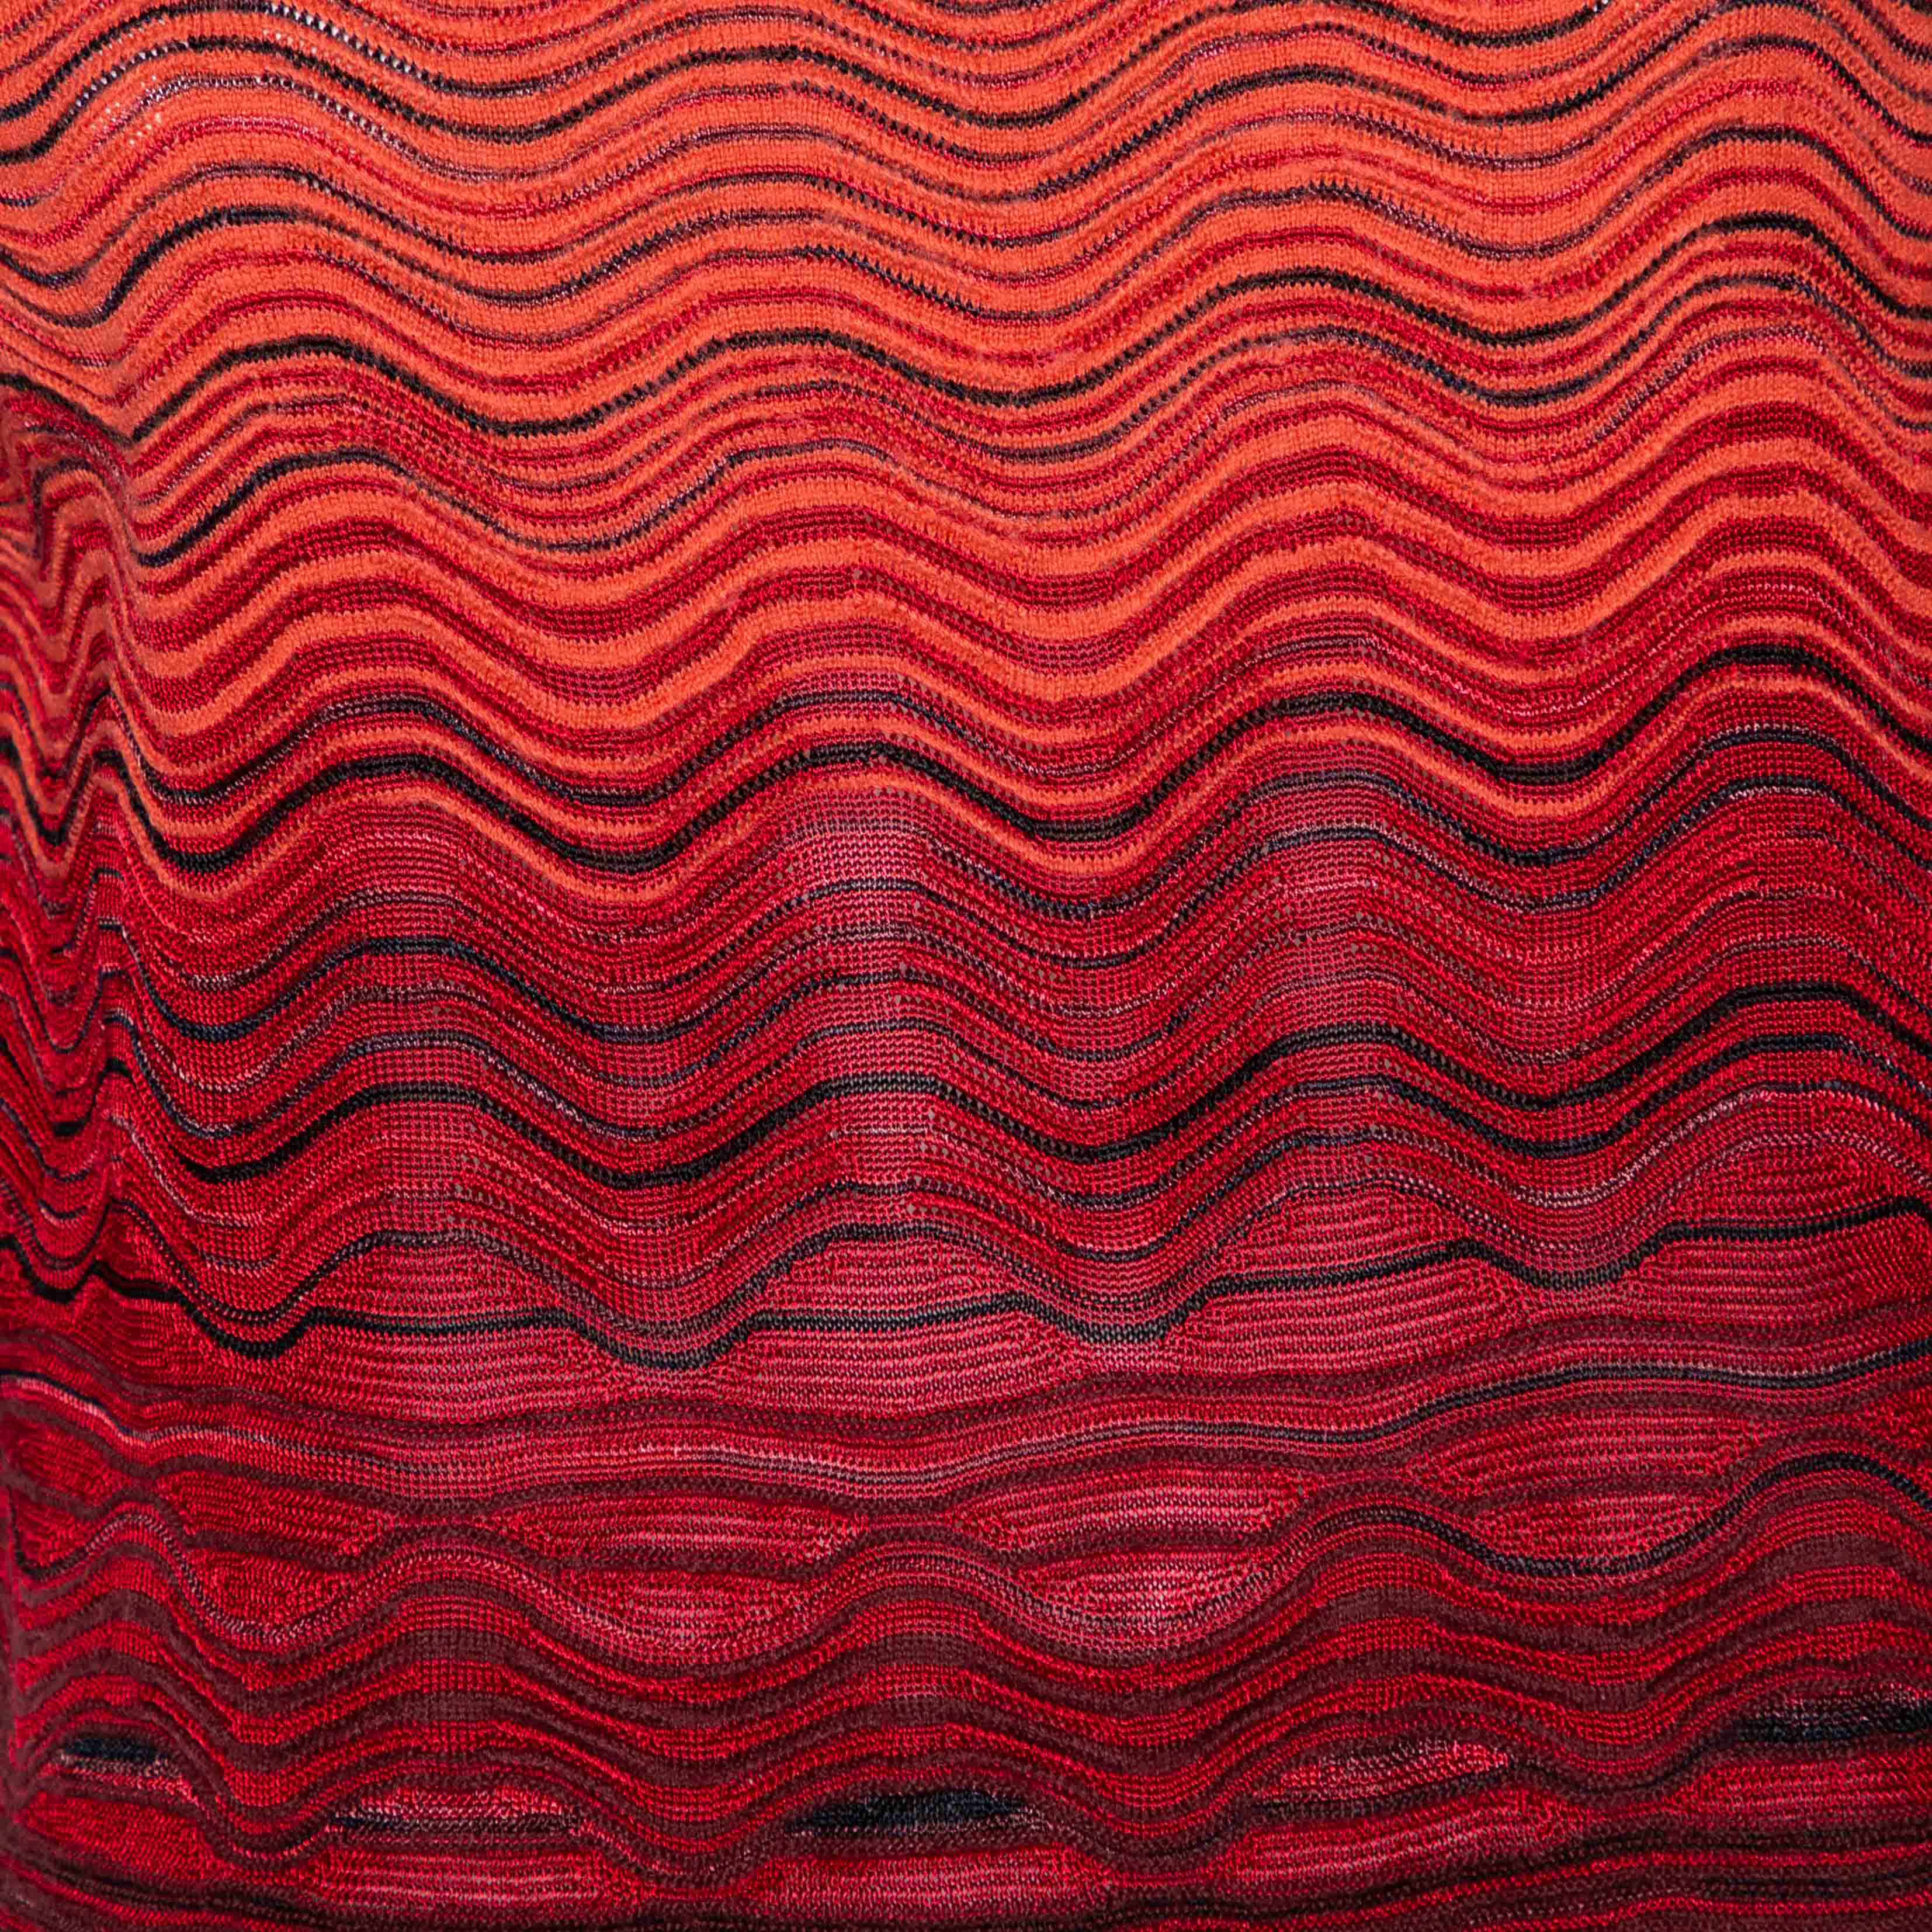 M Missoni Multicolor Wave Pattern Knit Oversized Top S